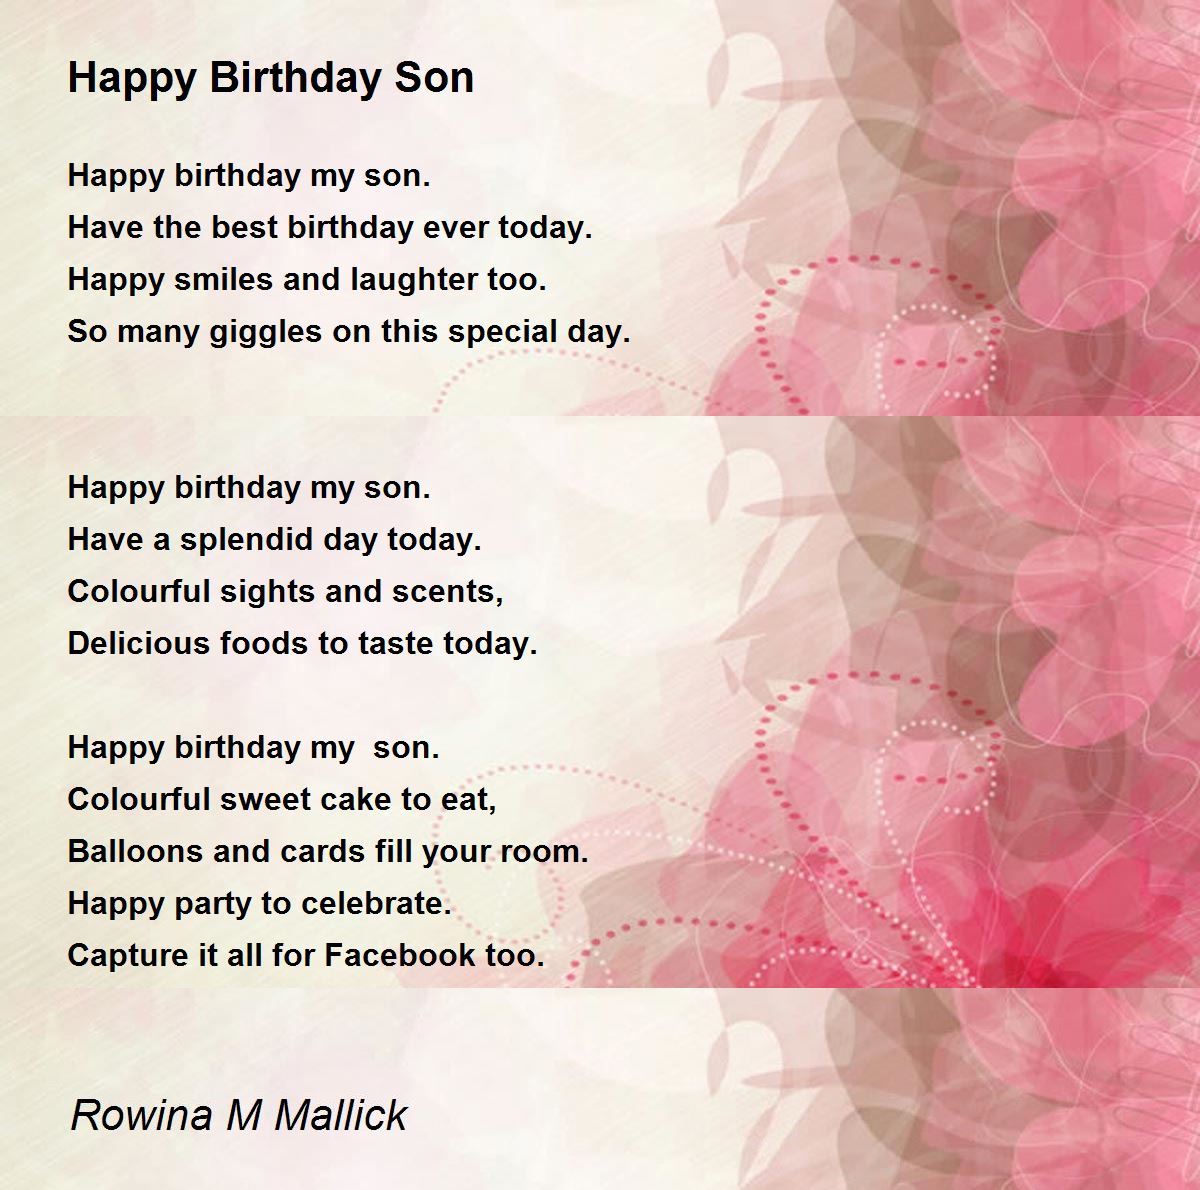 Happy Birthday Son - Happy Birthday Son Poem by Rose Mathew